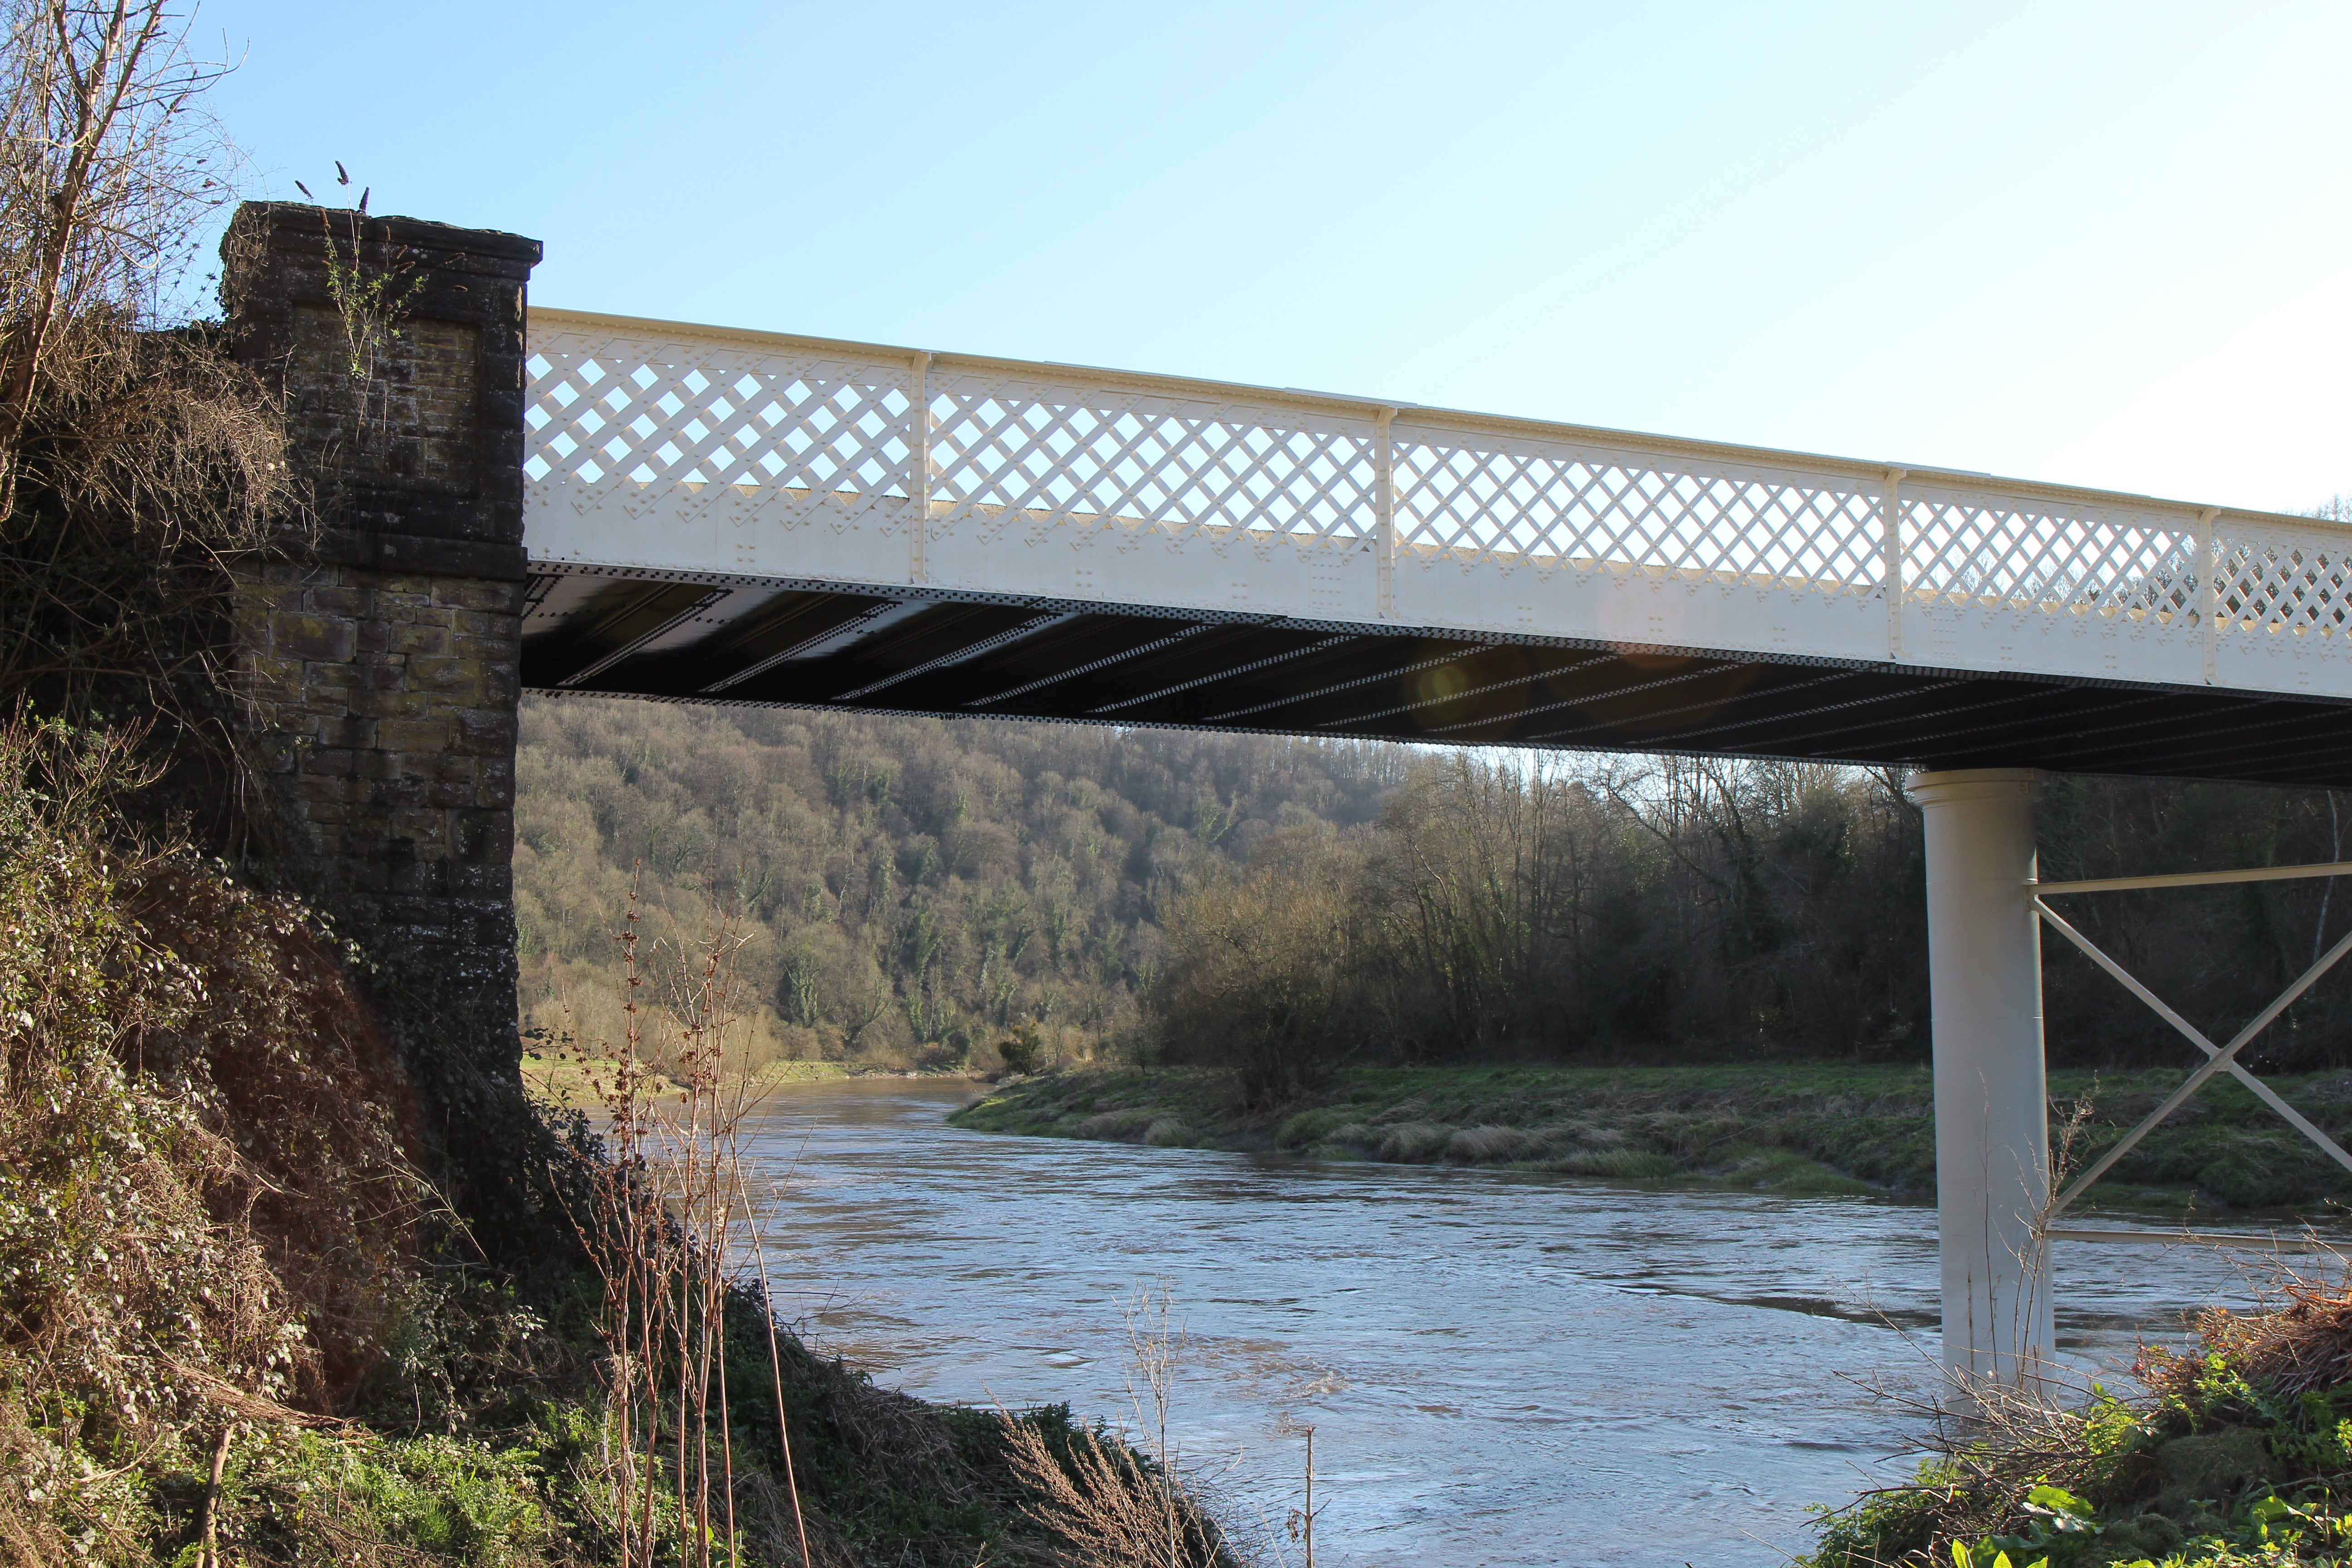 Brockweir bridge being restored with A&I fluoropolymer coating system